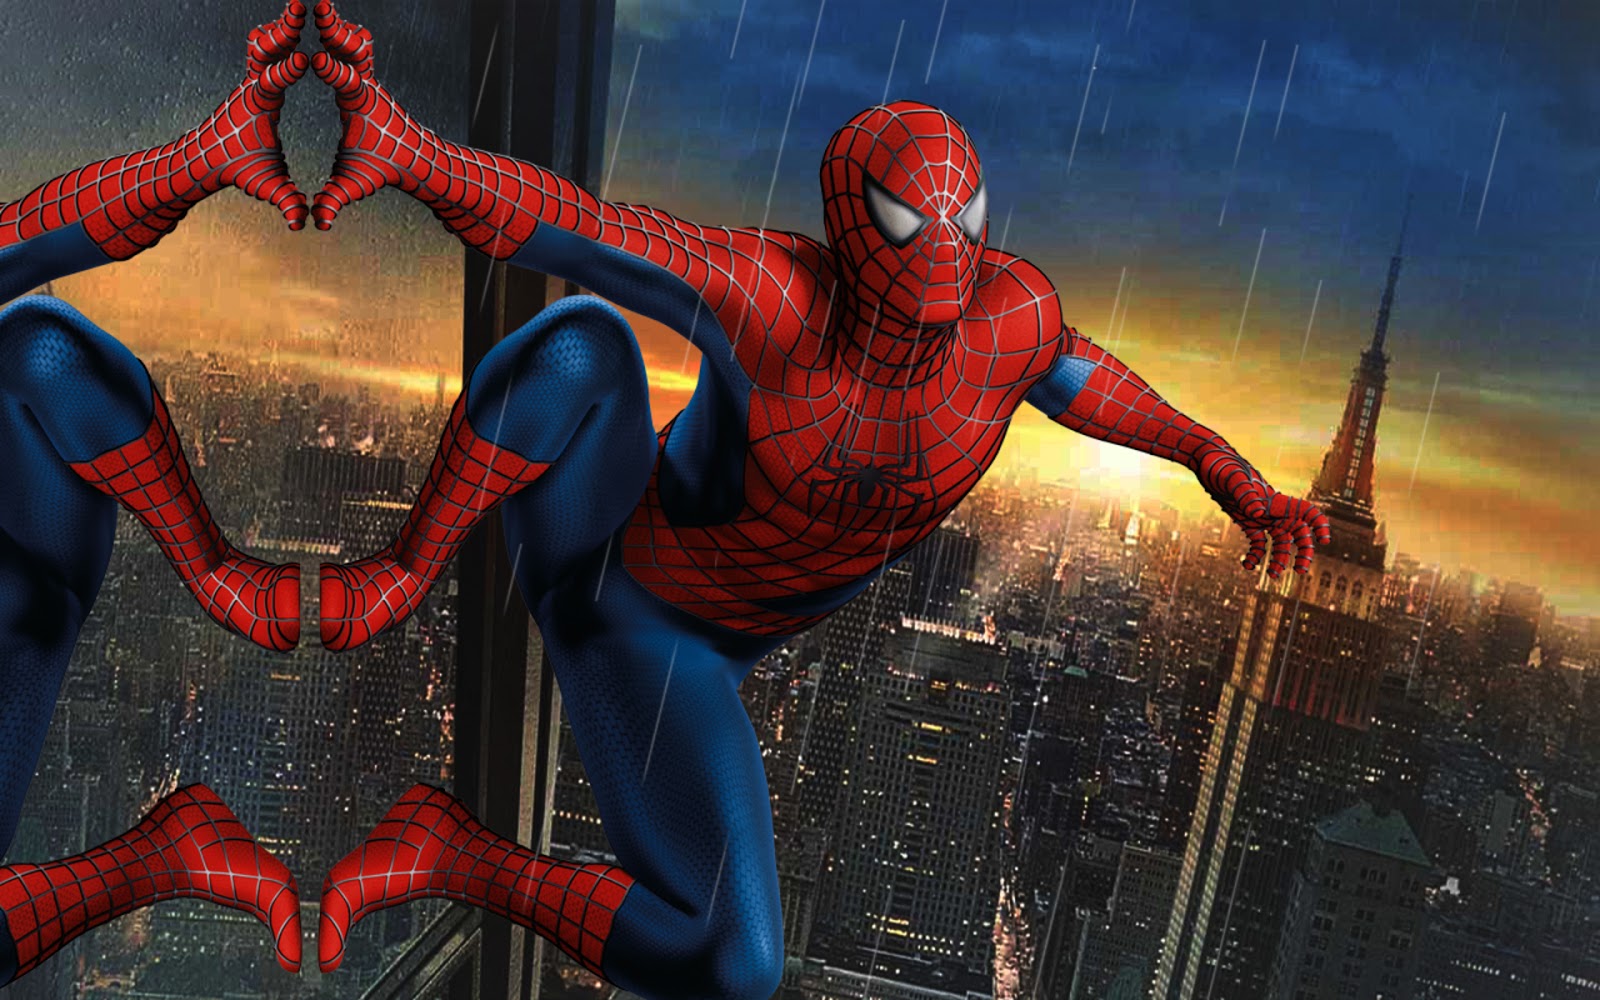  gambar  Gambar Spiderman  Keren Lengkap